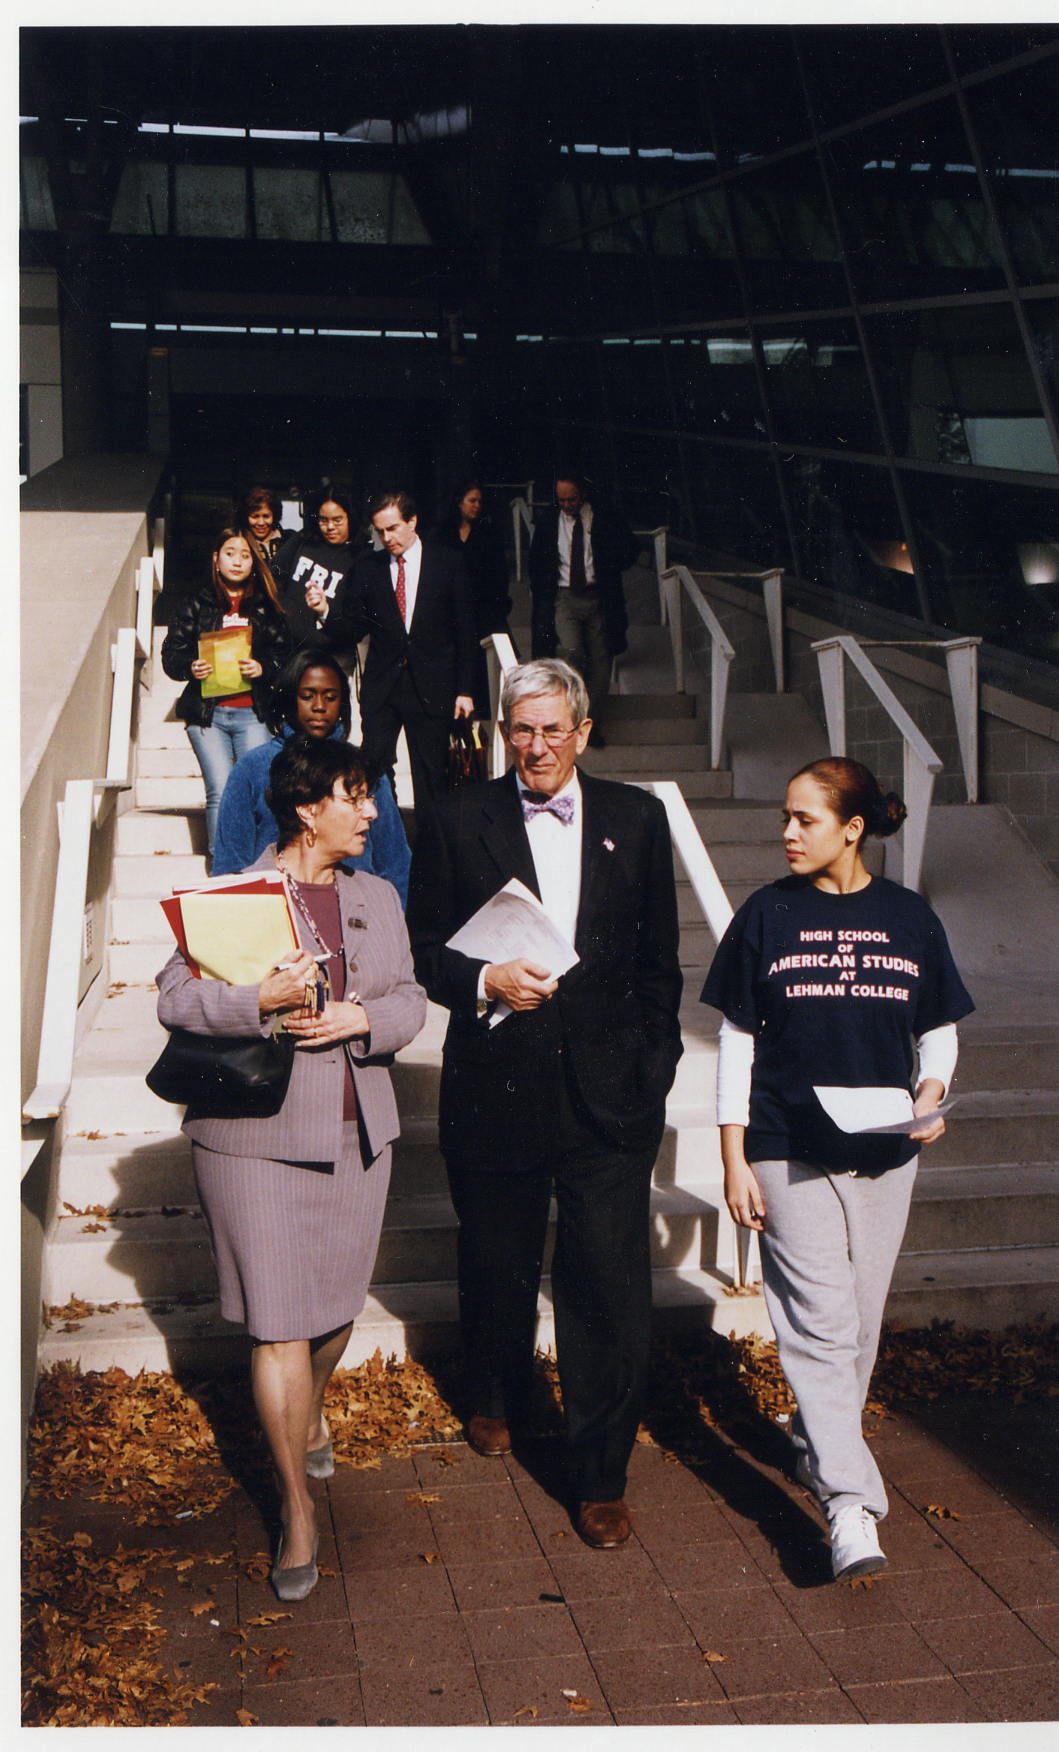 Richard Gilder at the High School of American Studies at Lehman College, a Gilder Lehrman Flagship School